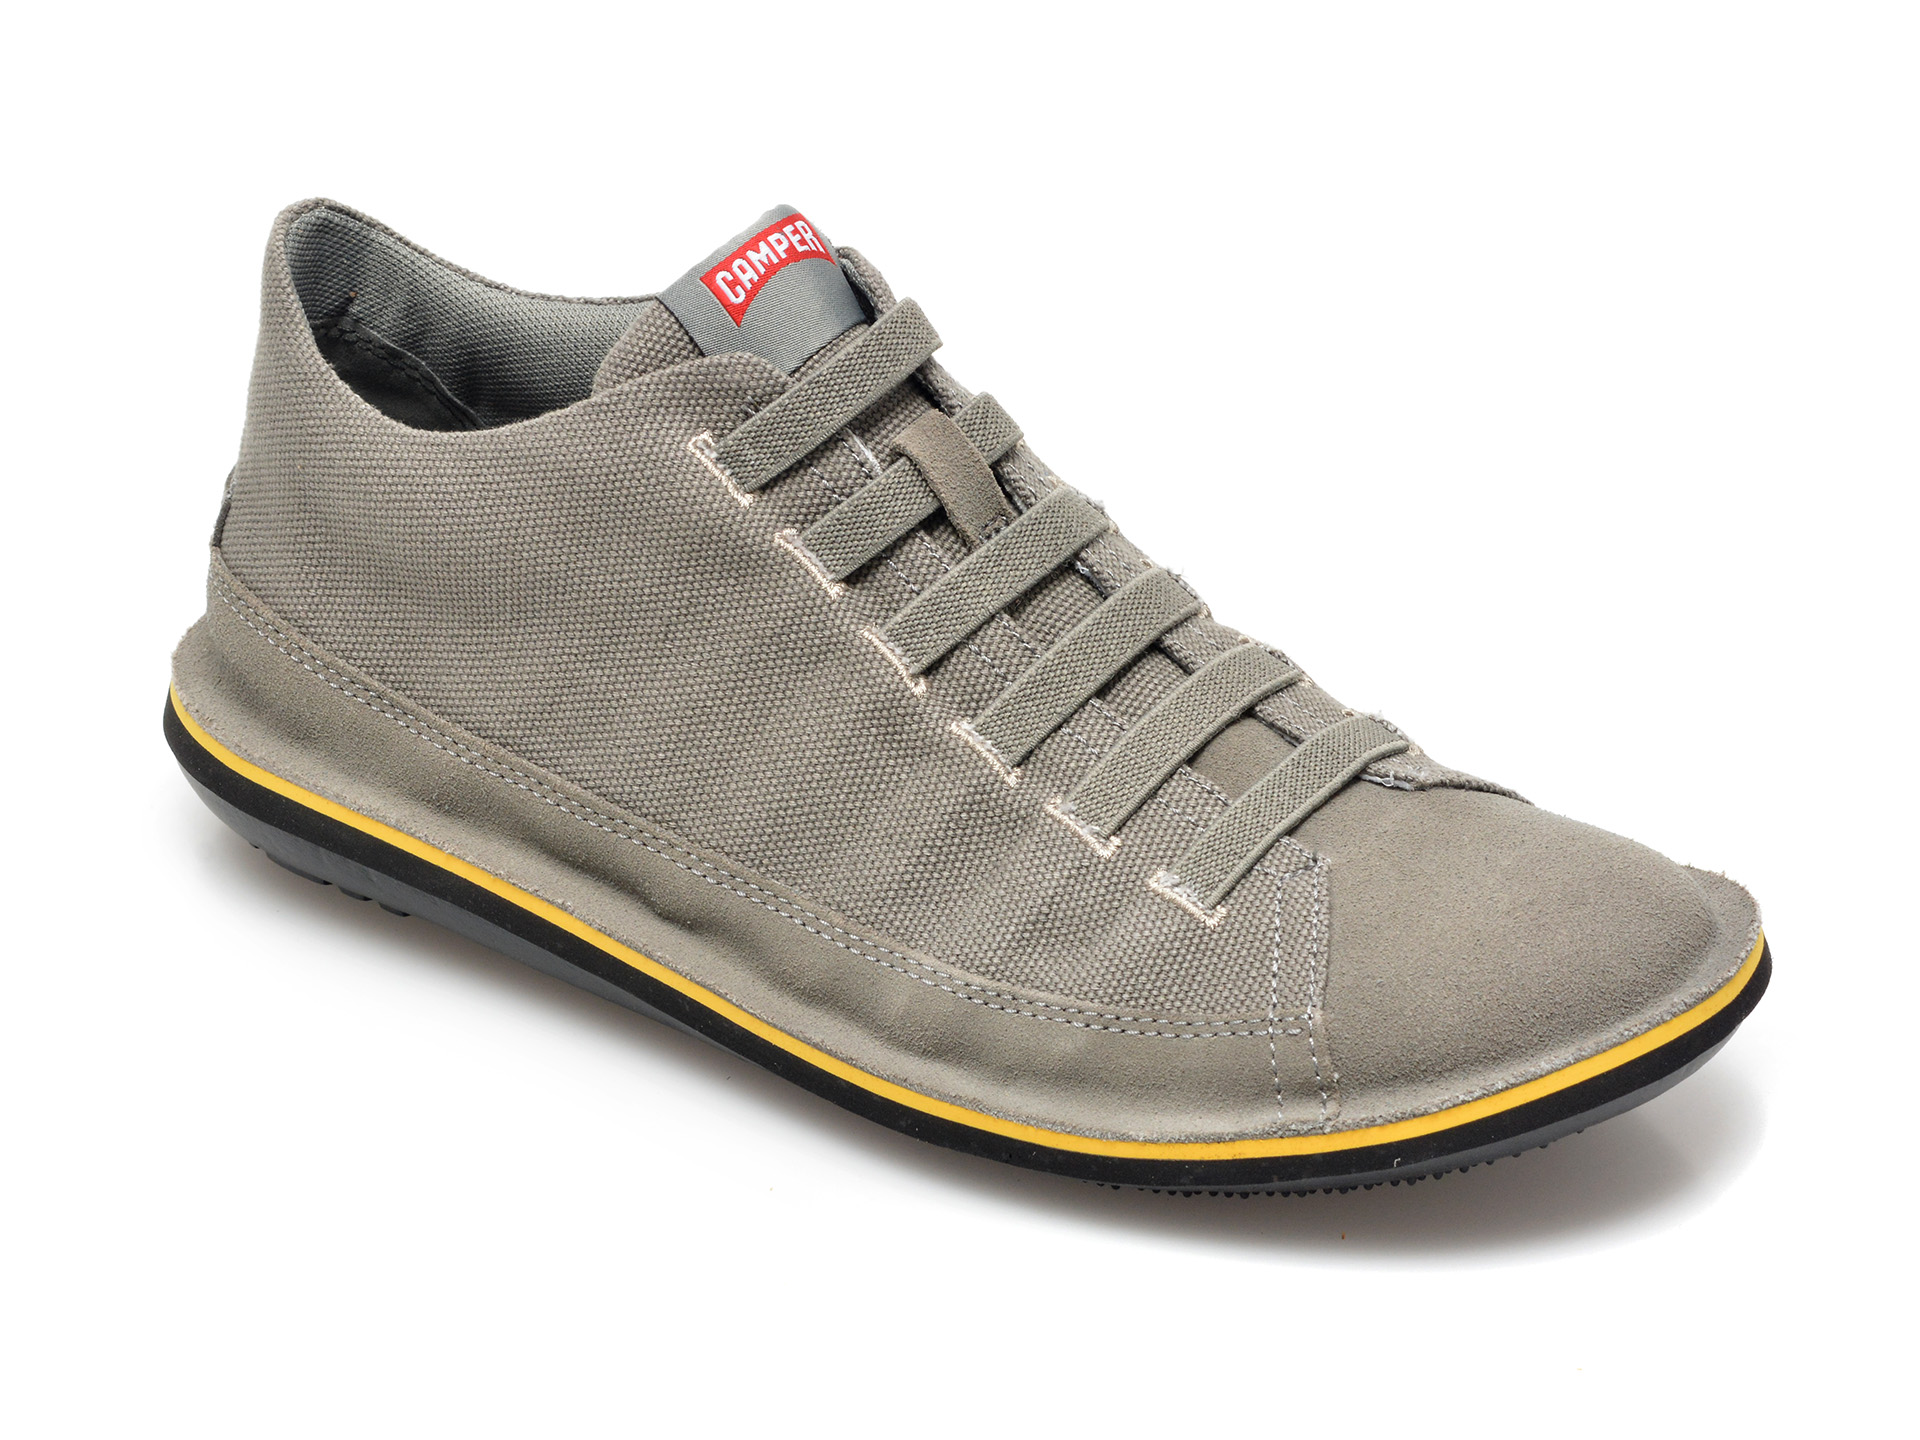 Pantofi CAMPER gri, 36791, din material textil si piele naturala Camper imagine 2022 13clothing.ro